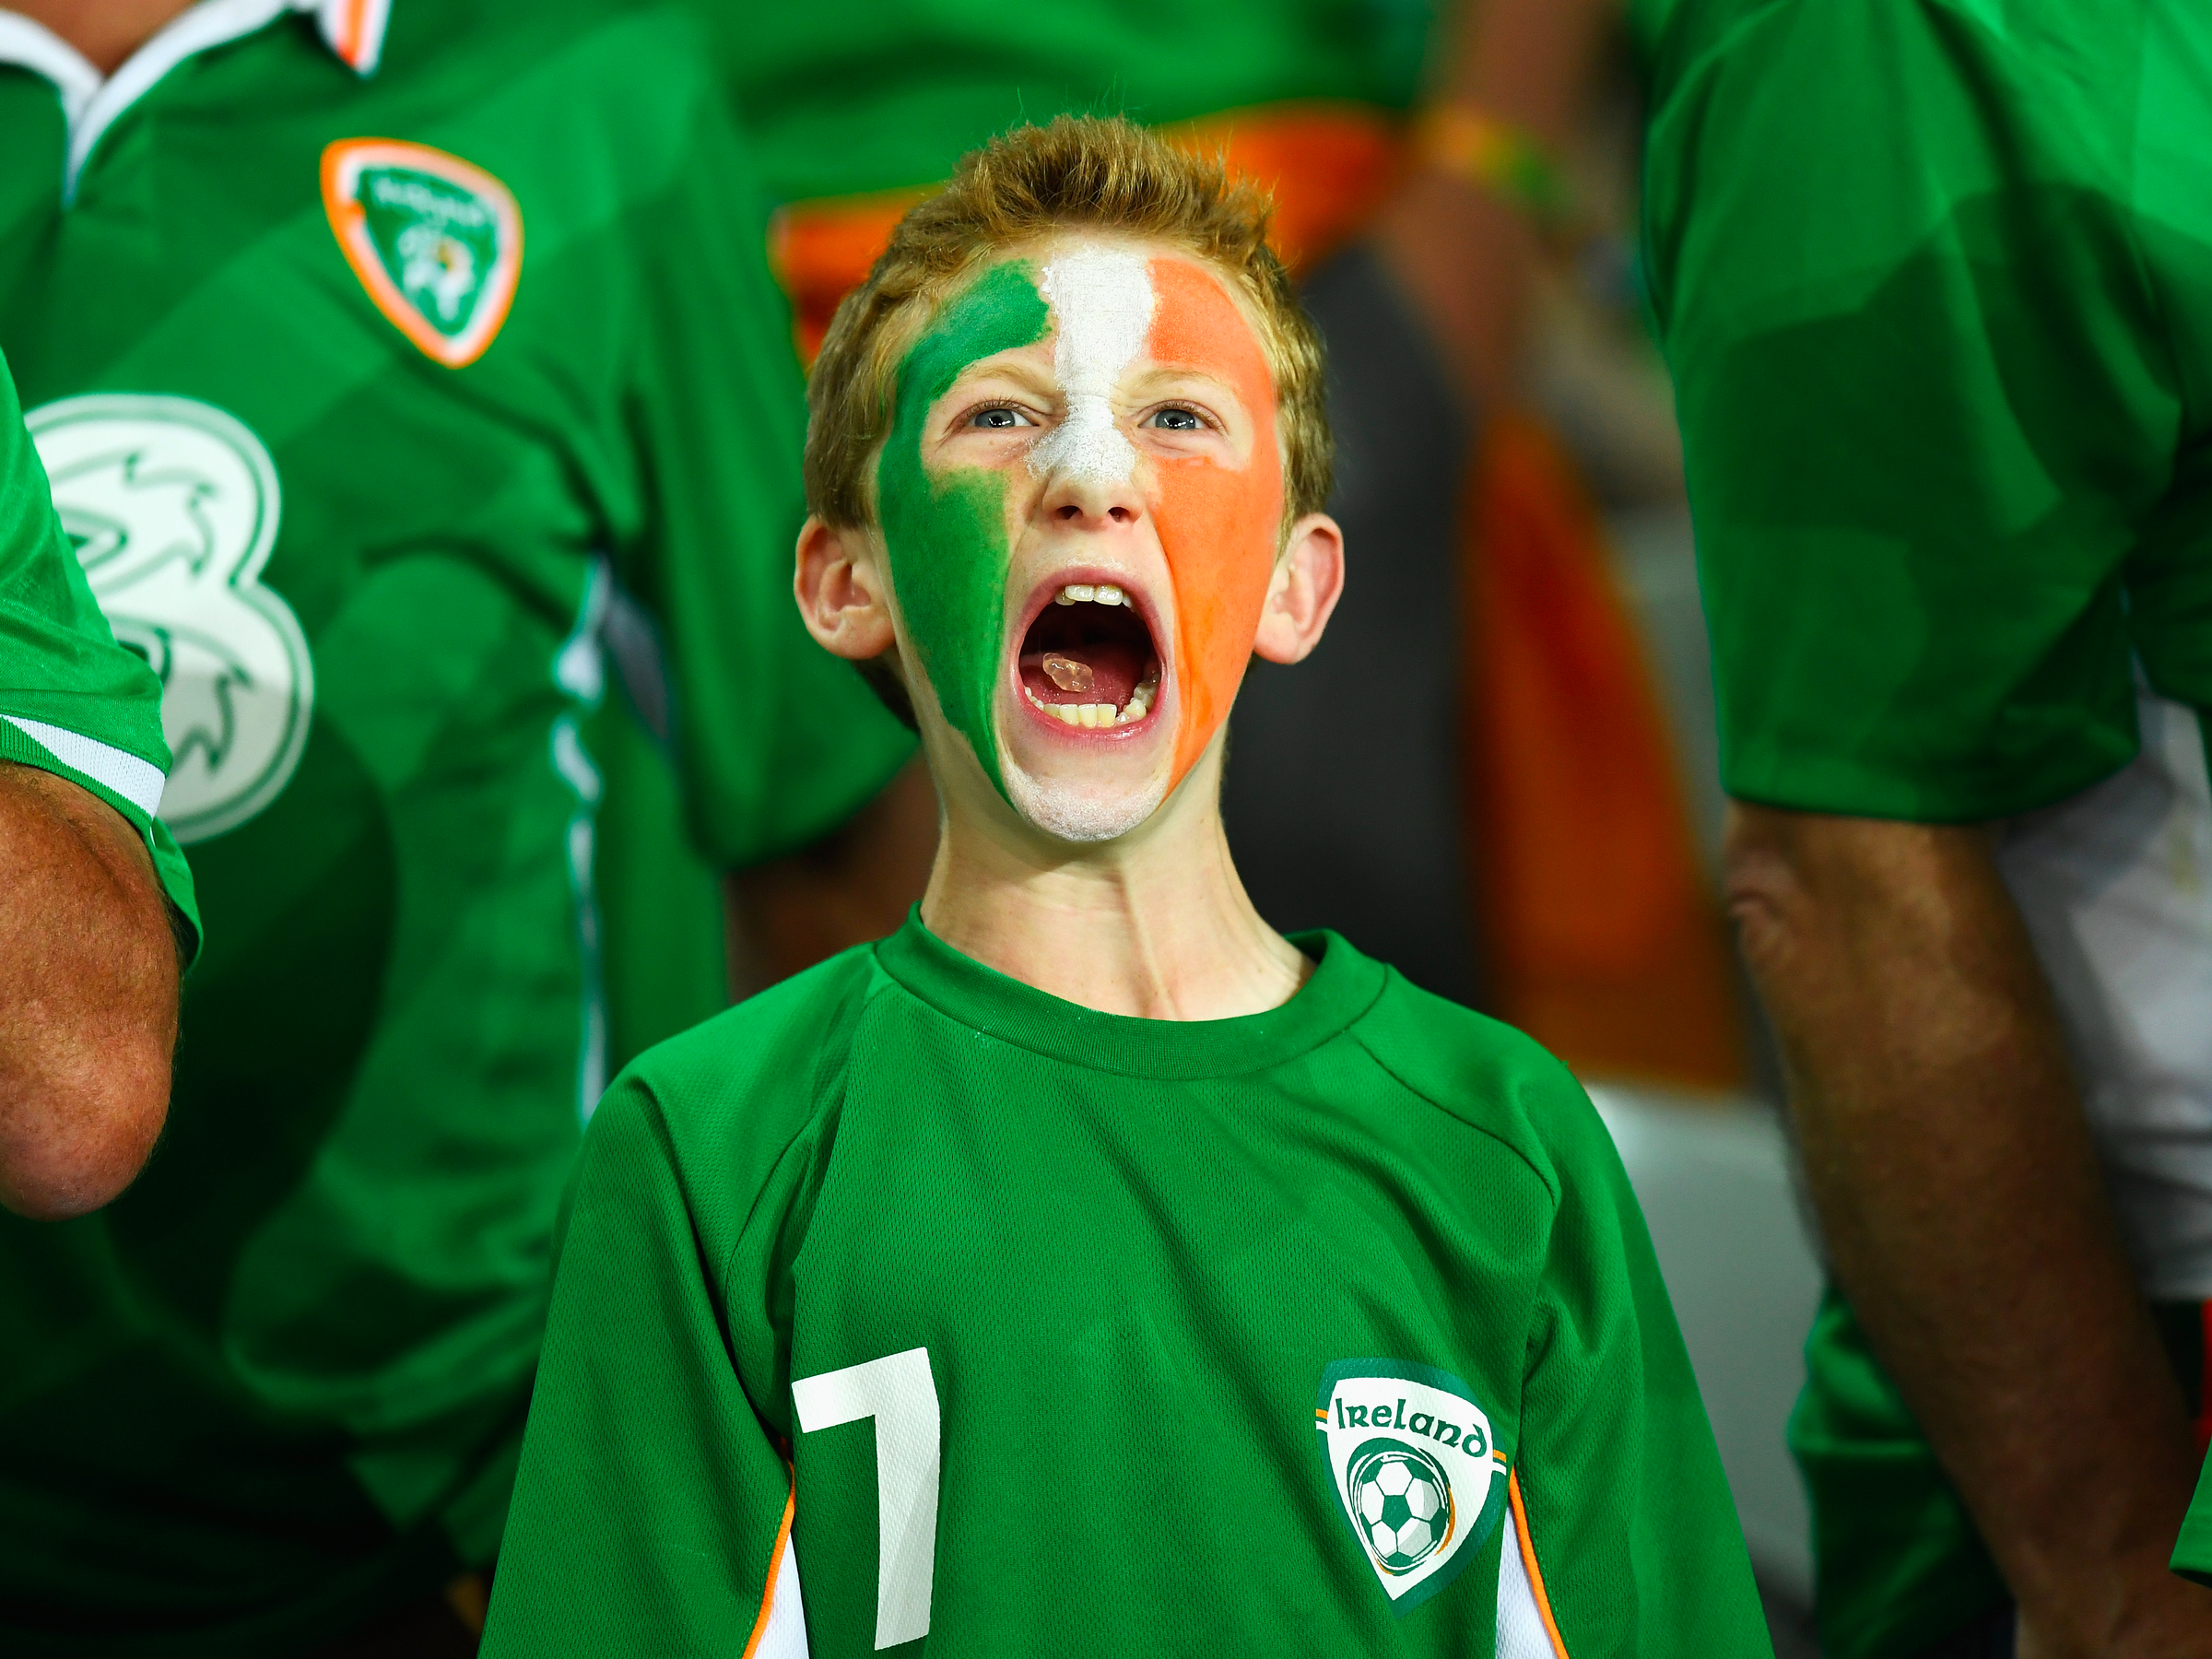 ireland fan shouting screaming child boy irish supporter